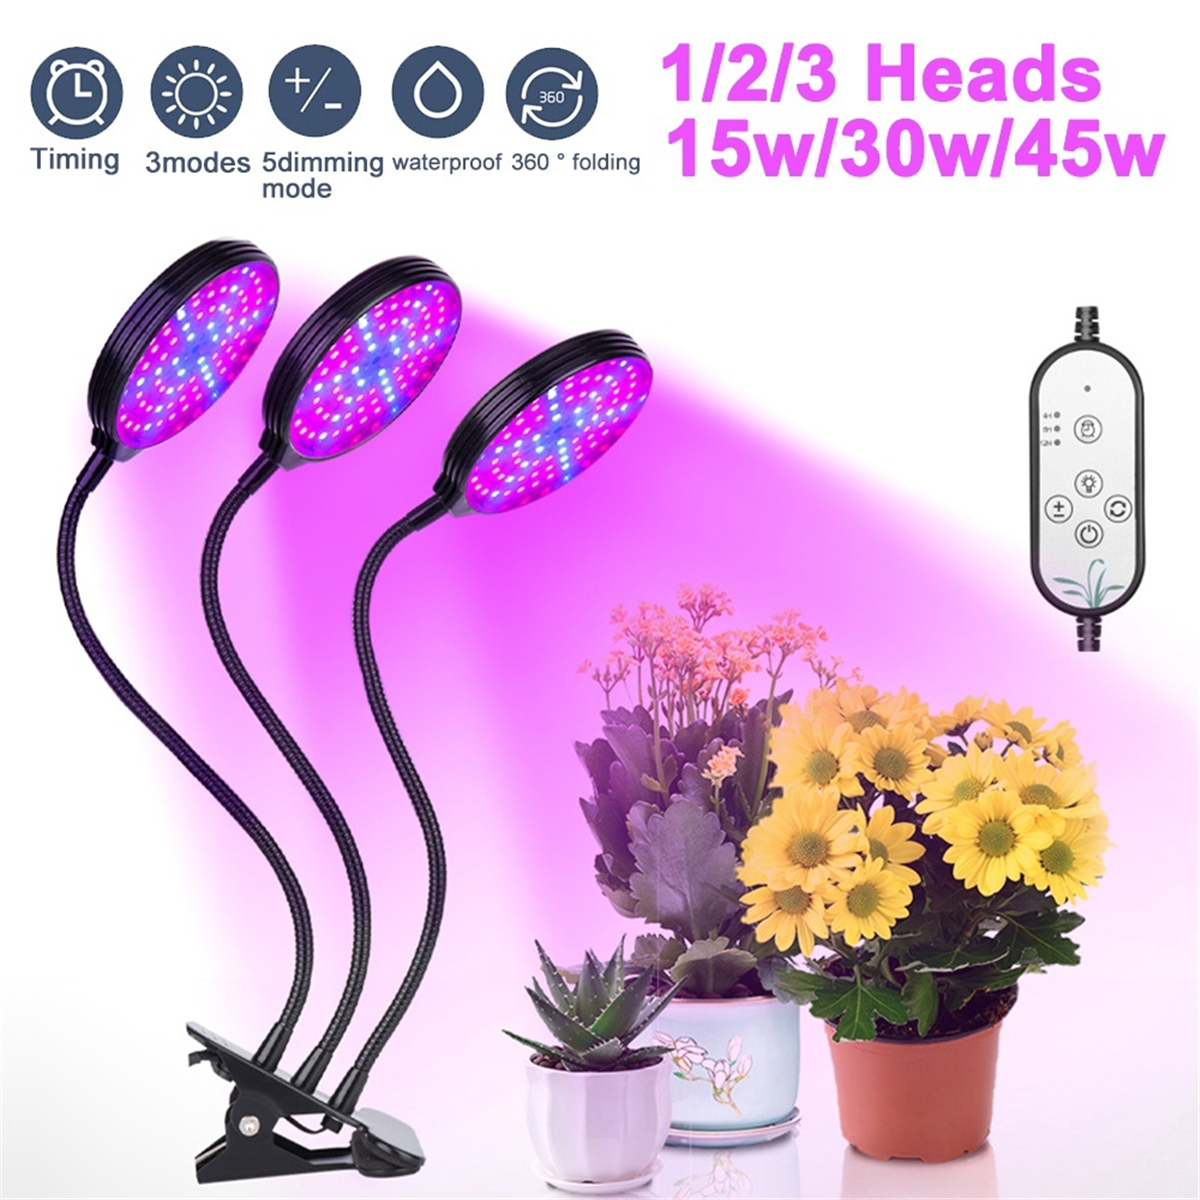 123-Head-Plant-Grow-Light-Head-LED-Lamp-Hydroponics-Greenhouse-Garden-360deg-Flexible-Indoor-Dimmabl-1693745-1